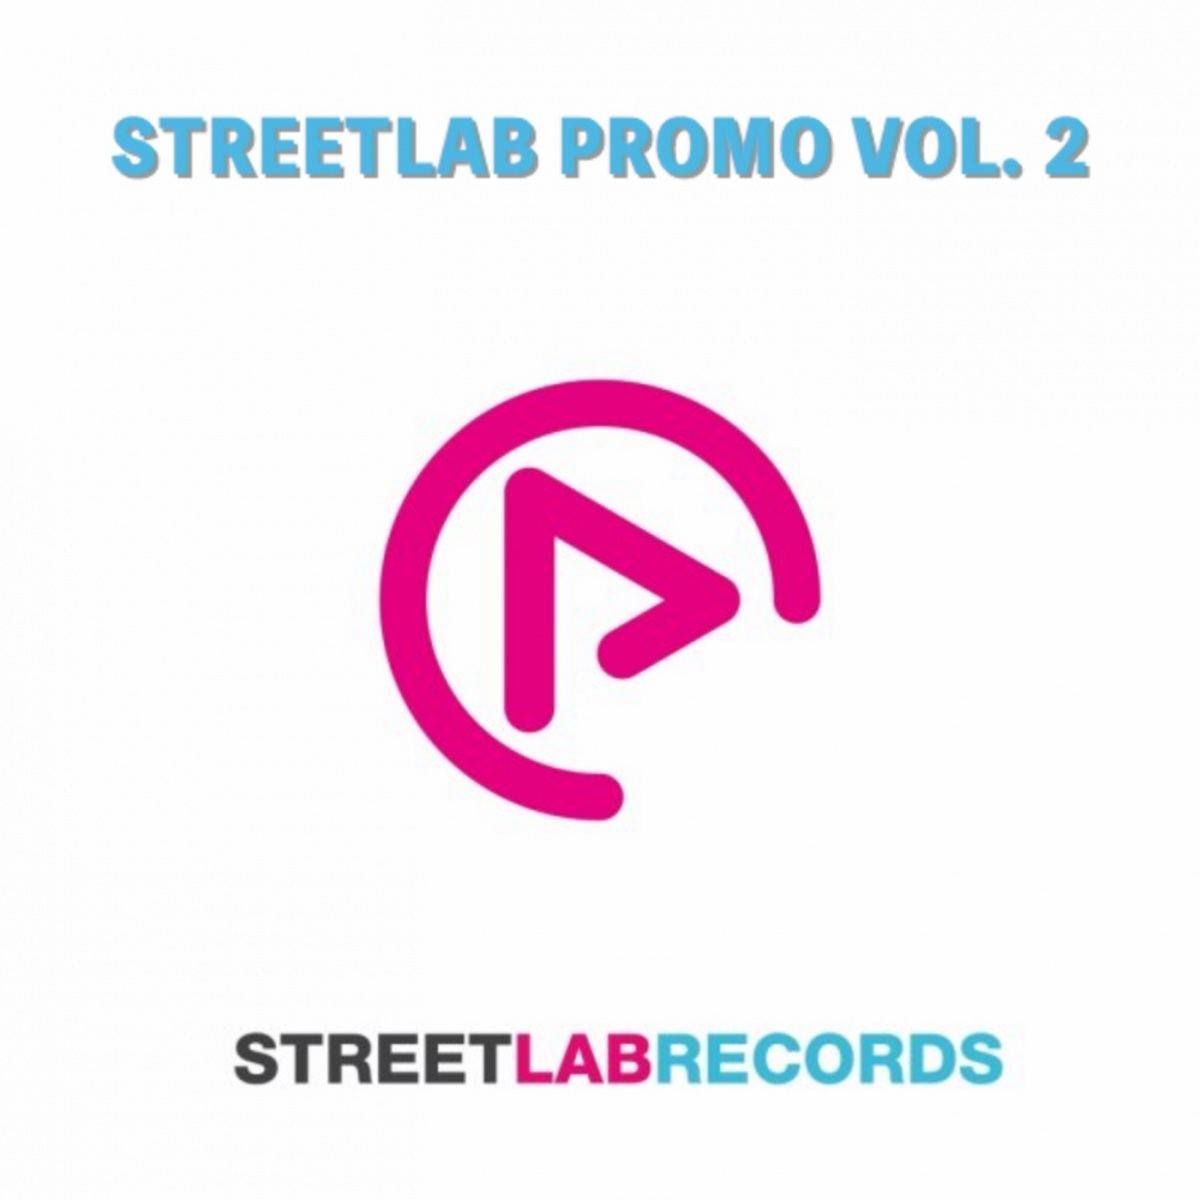 VA - Streetlab Promo, Vol. 2 / Streetlab Records